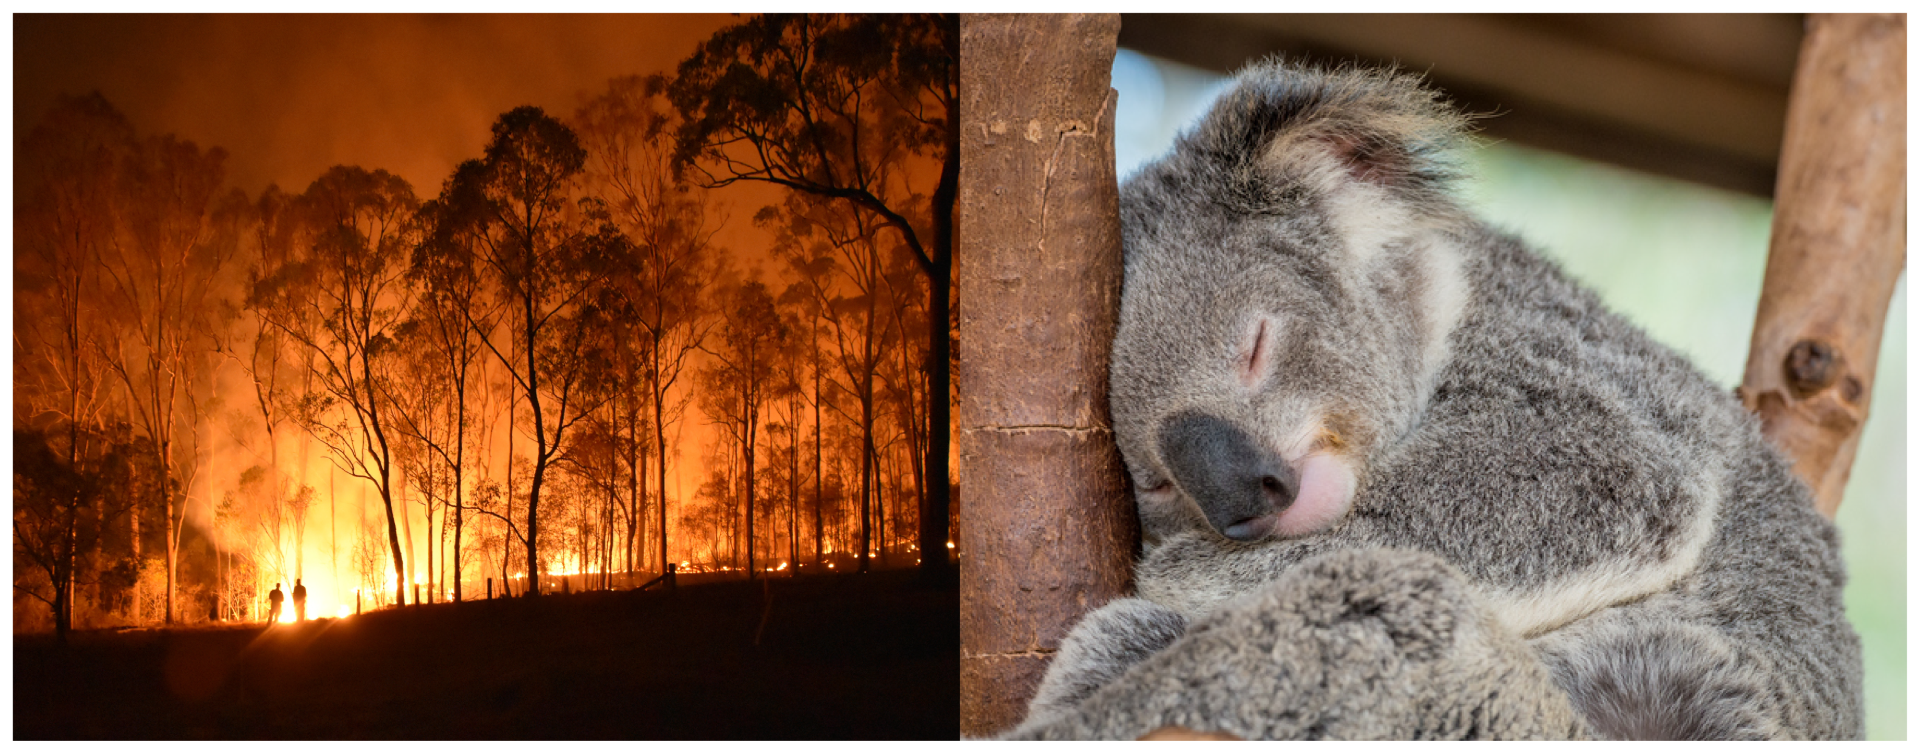 JCI Australia Fire Response Appeal